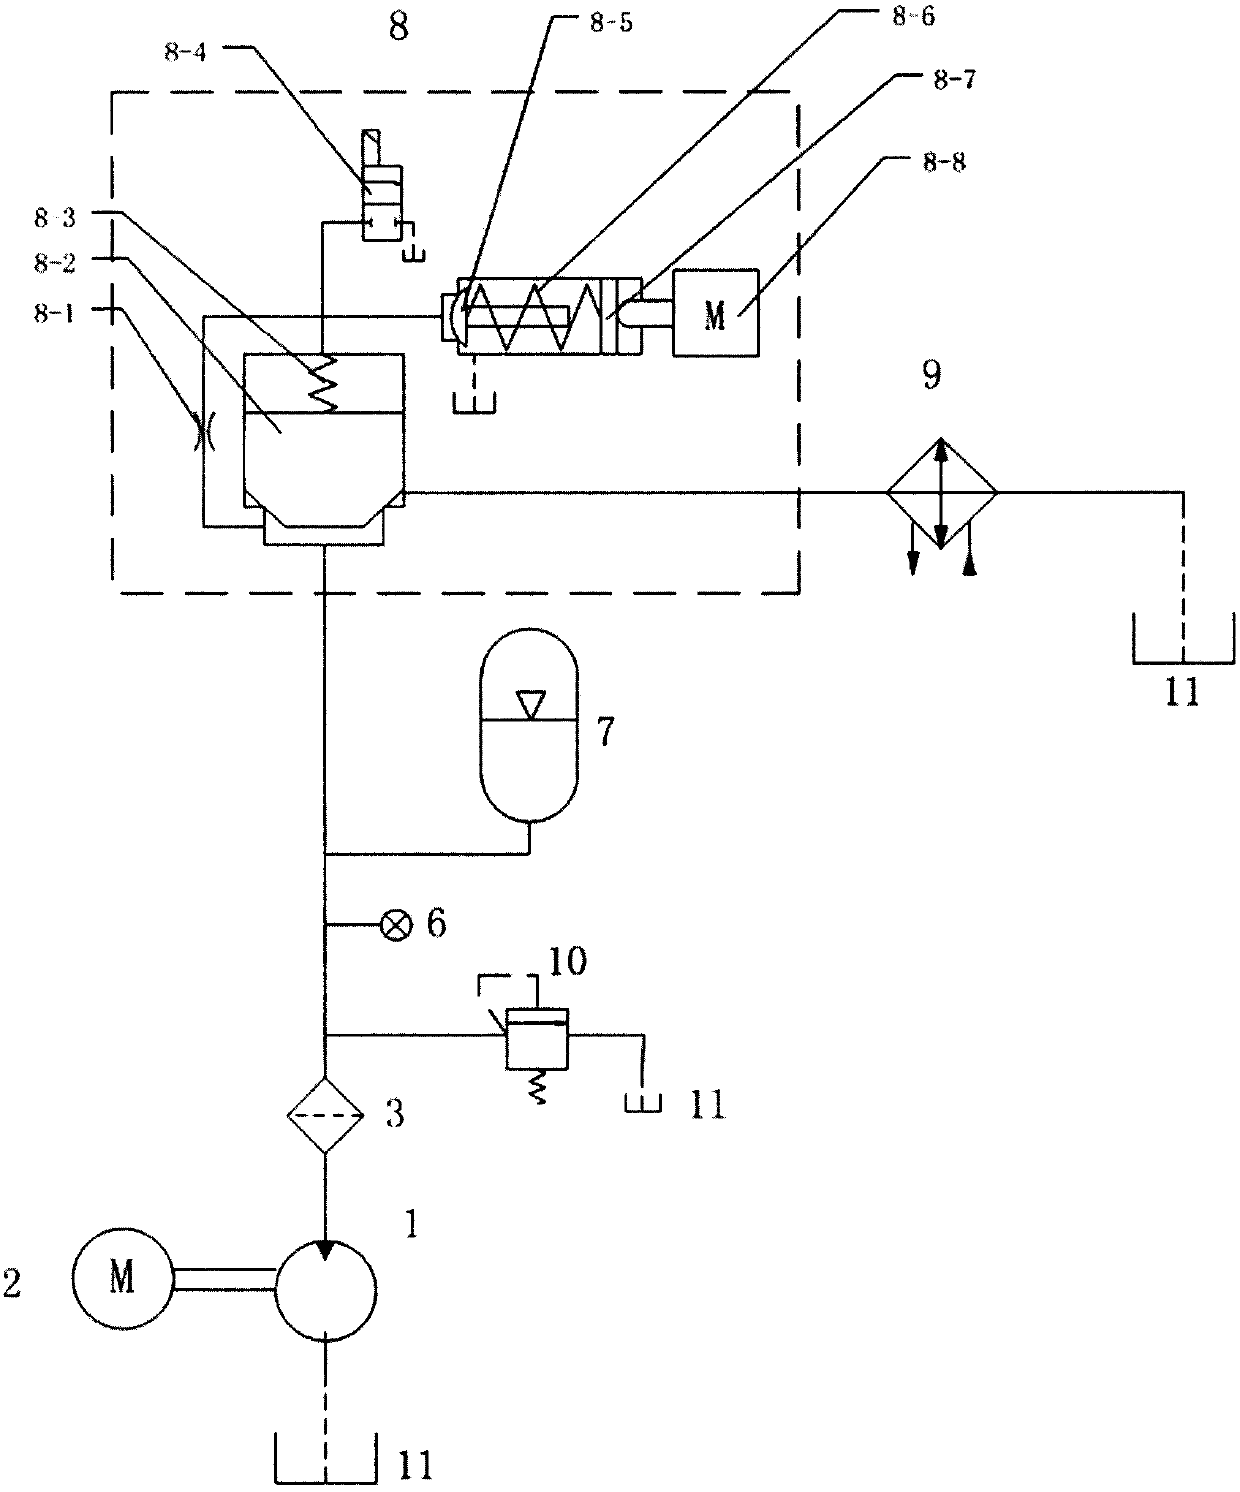 Automatic control hydraulic pump testing system and method